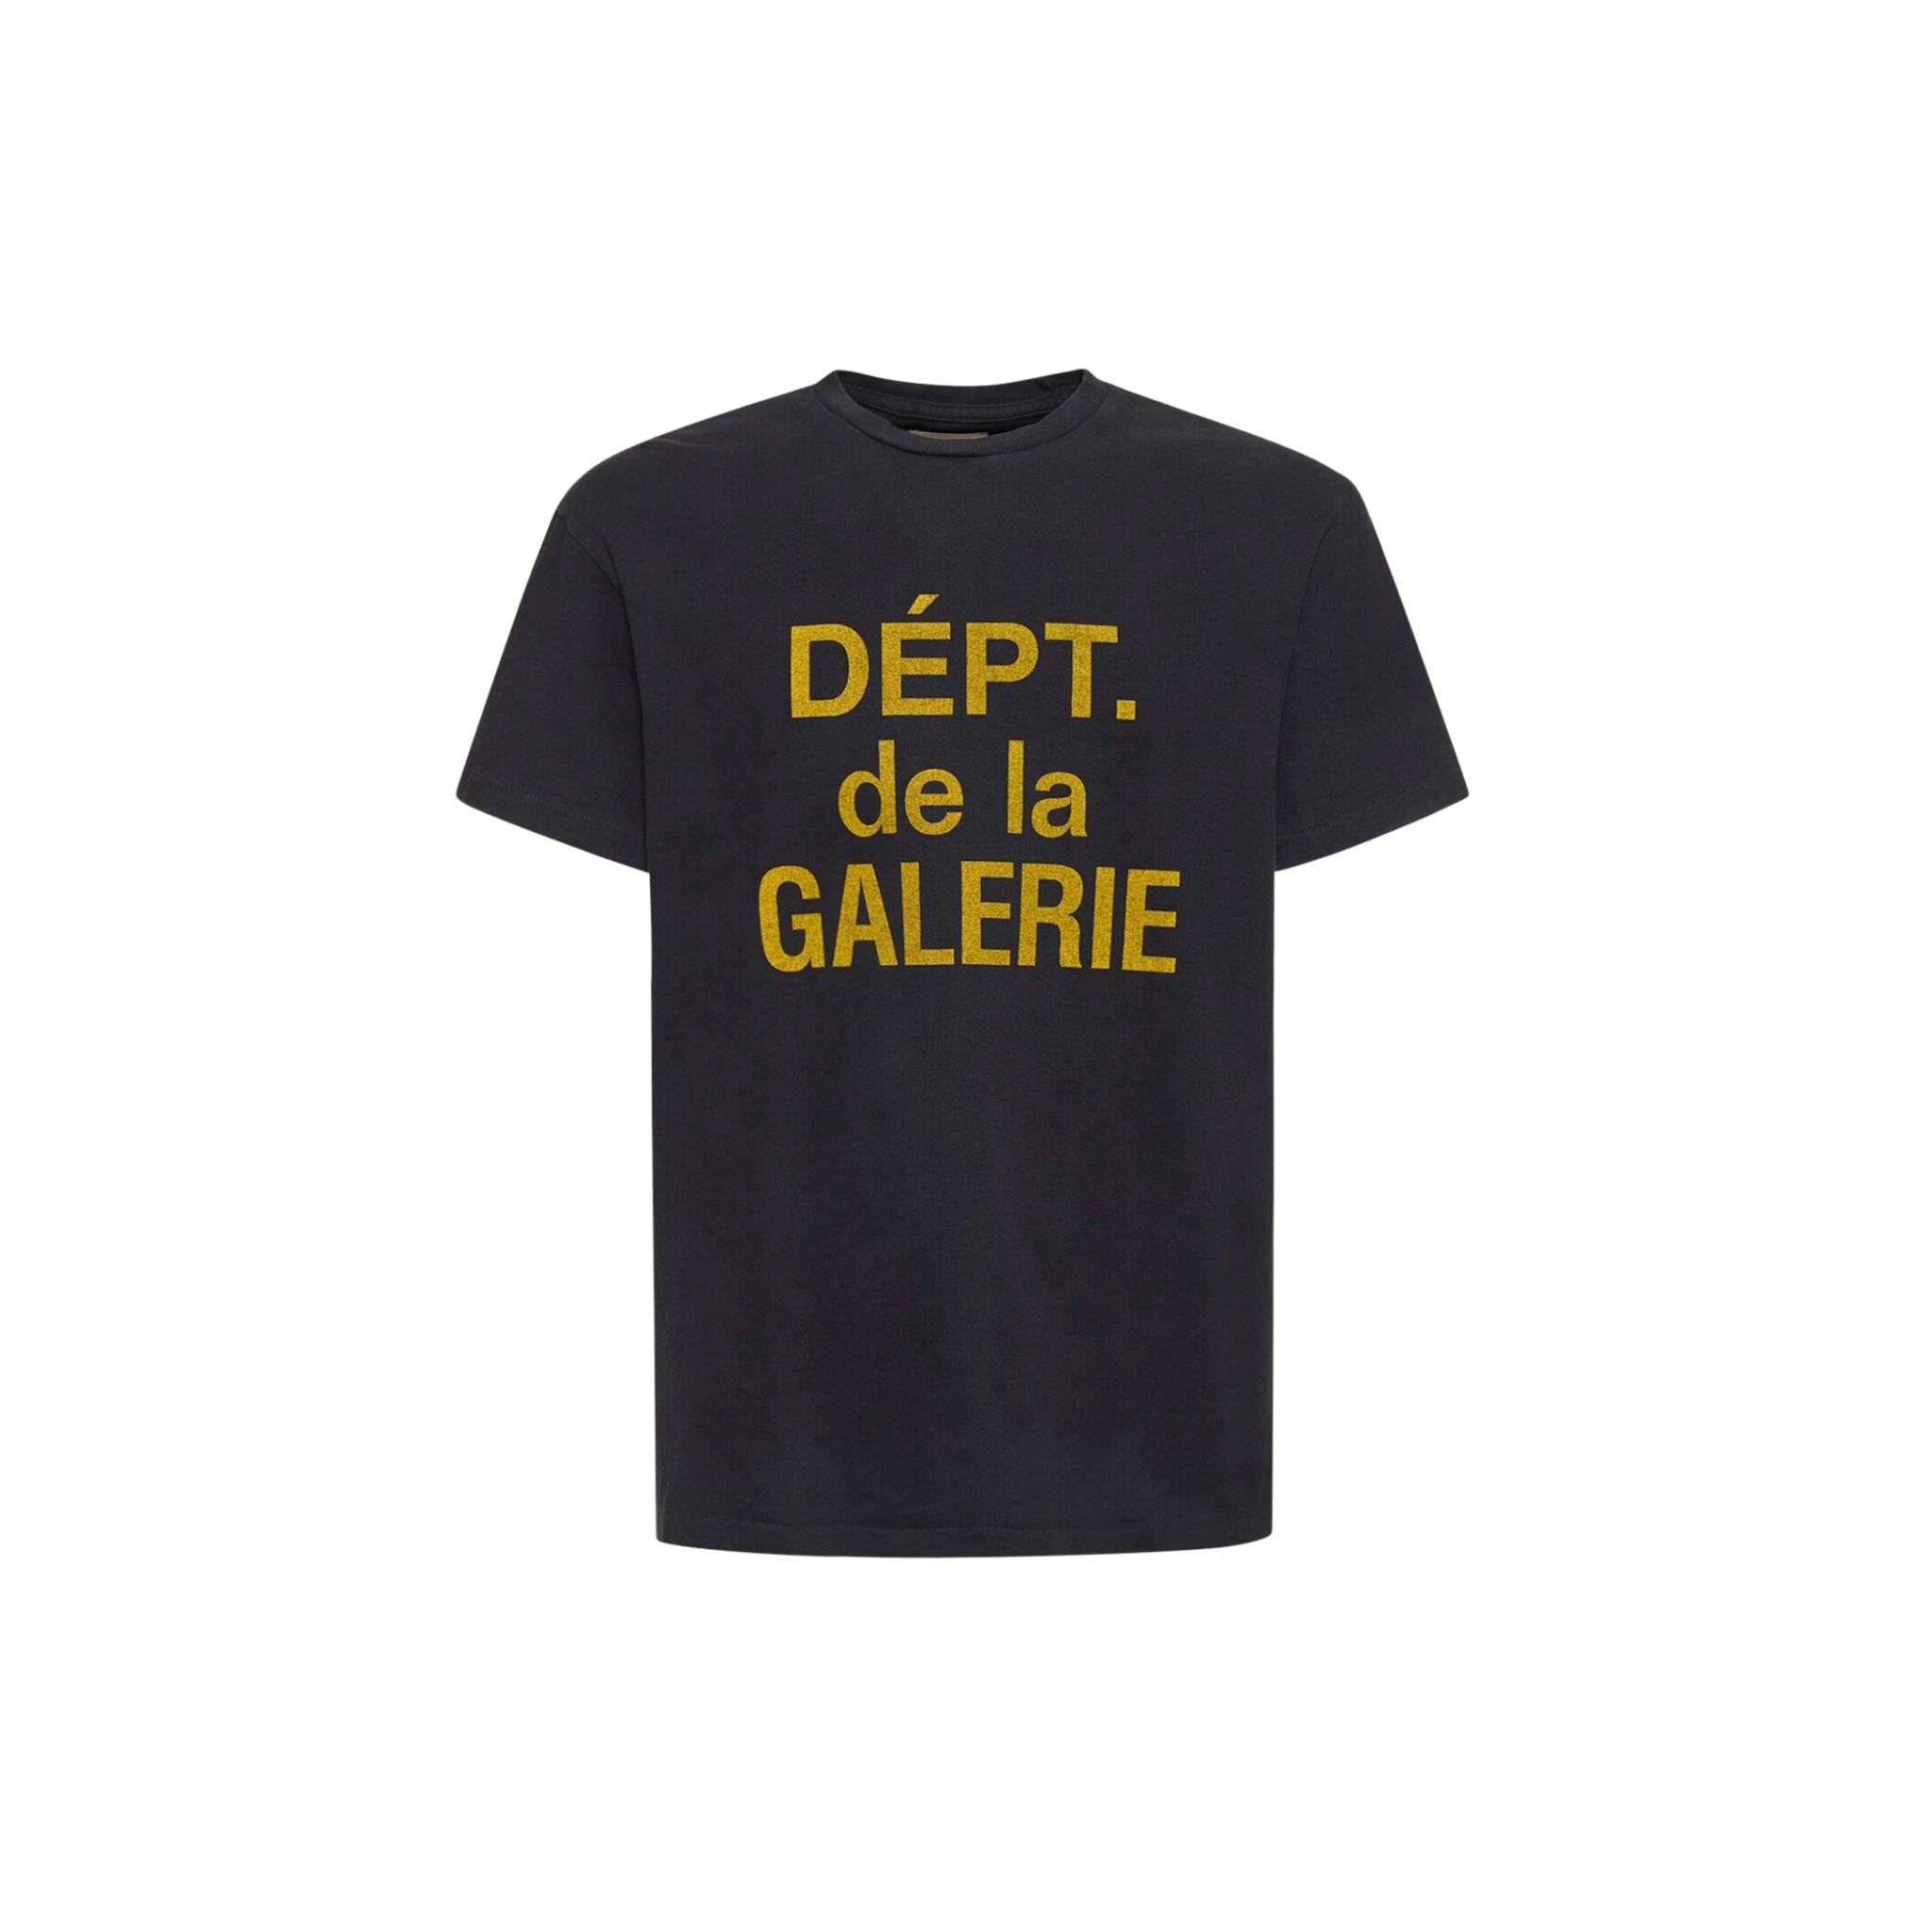 Gallery Dept. French Logo T-Shirt